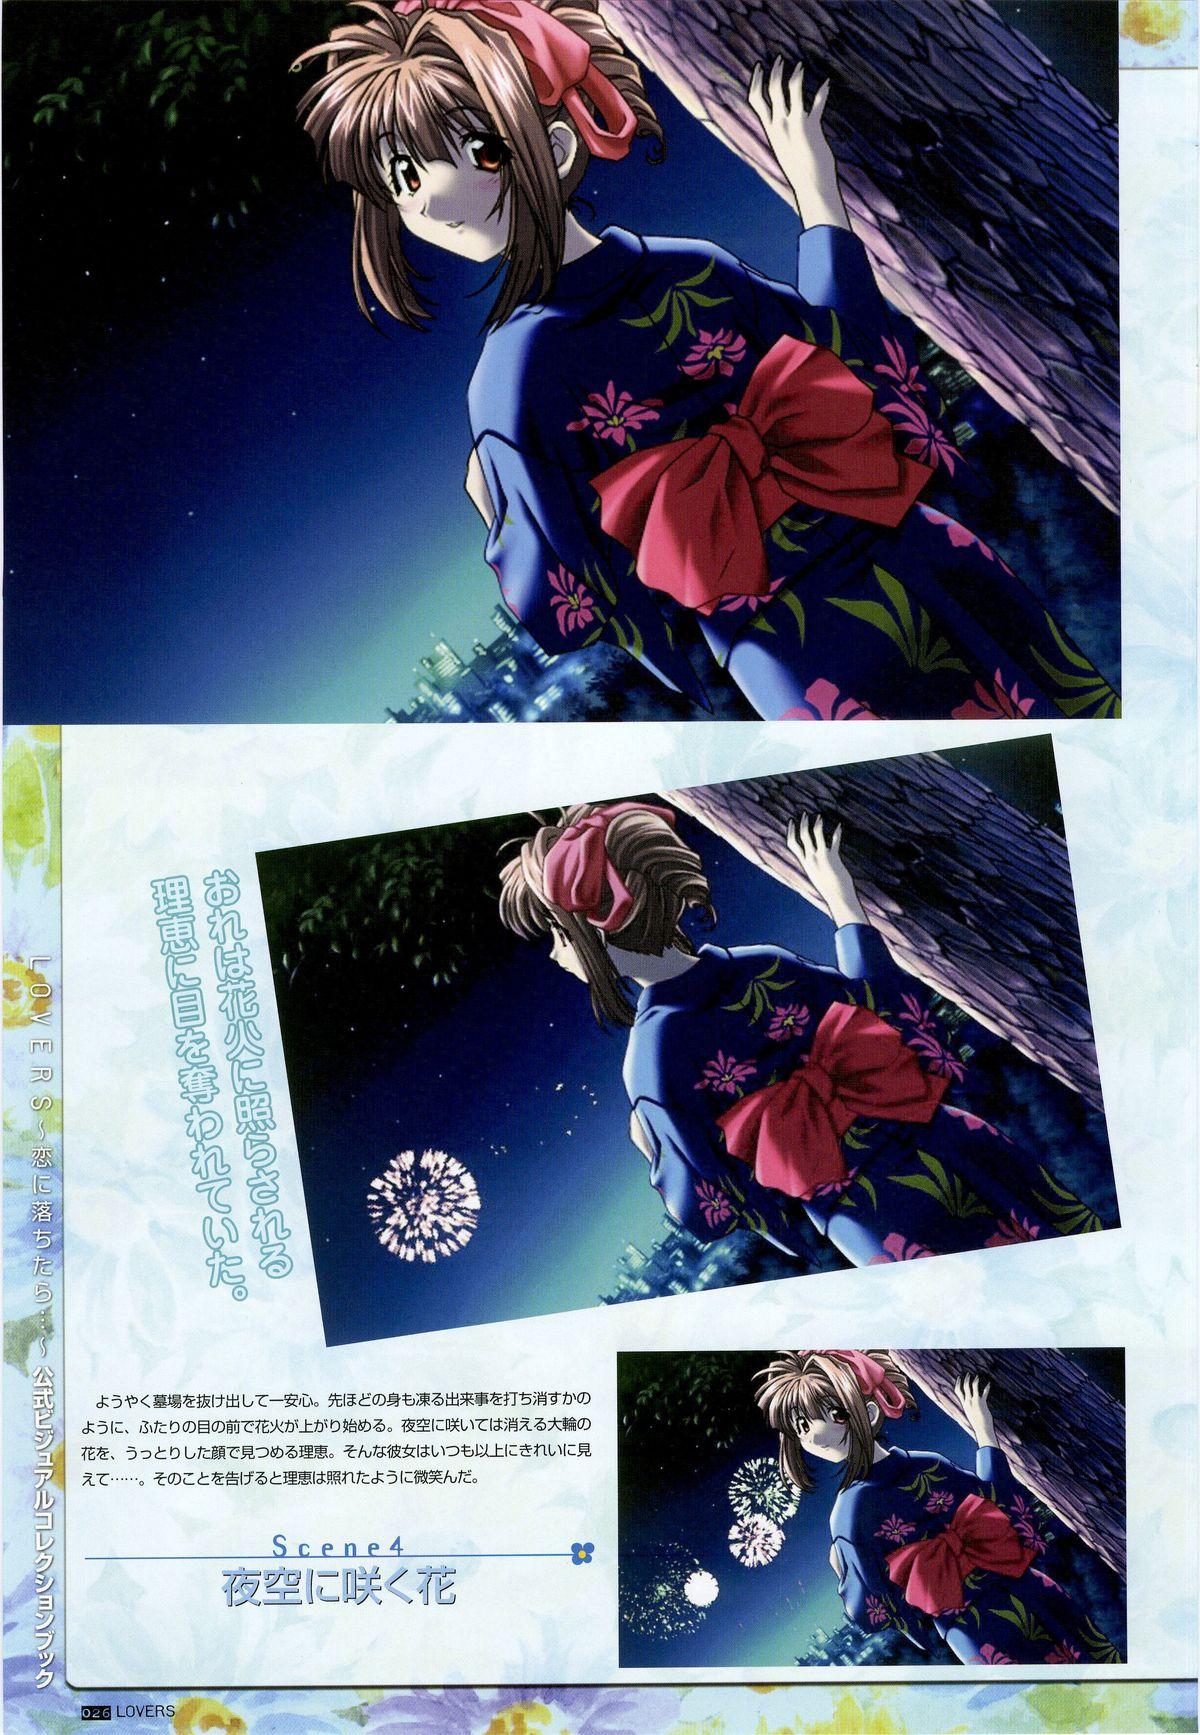 LOVERS ~Koi ni Ochitara...~ Official Visual Collection Book 31